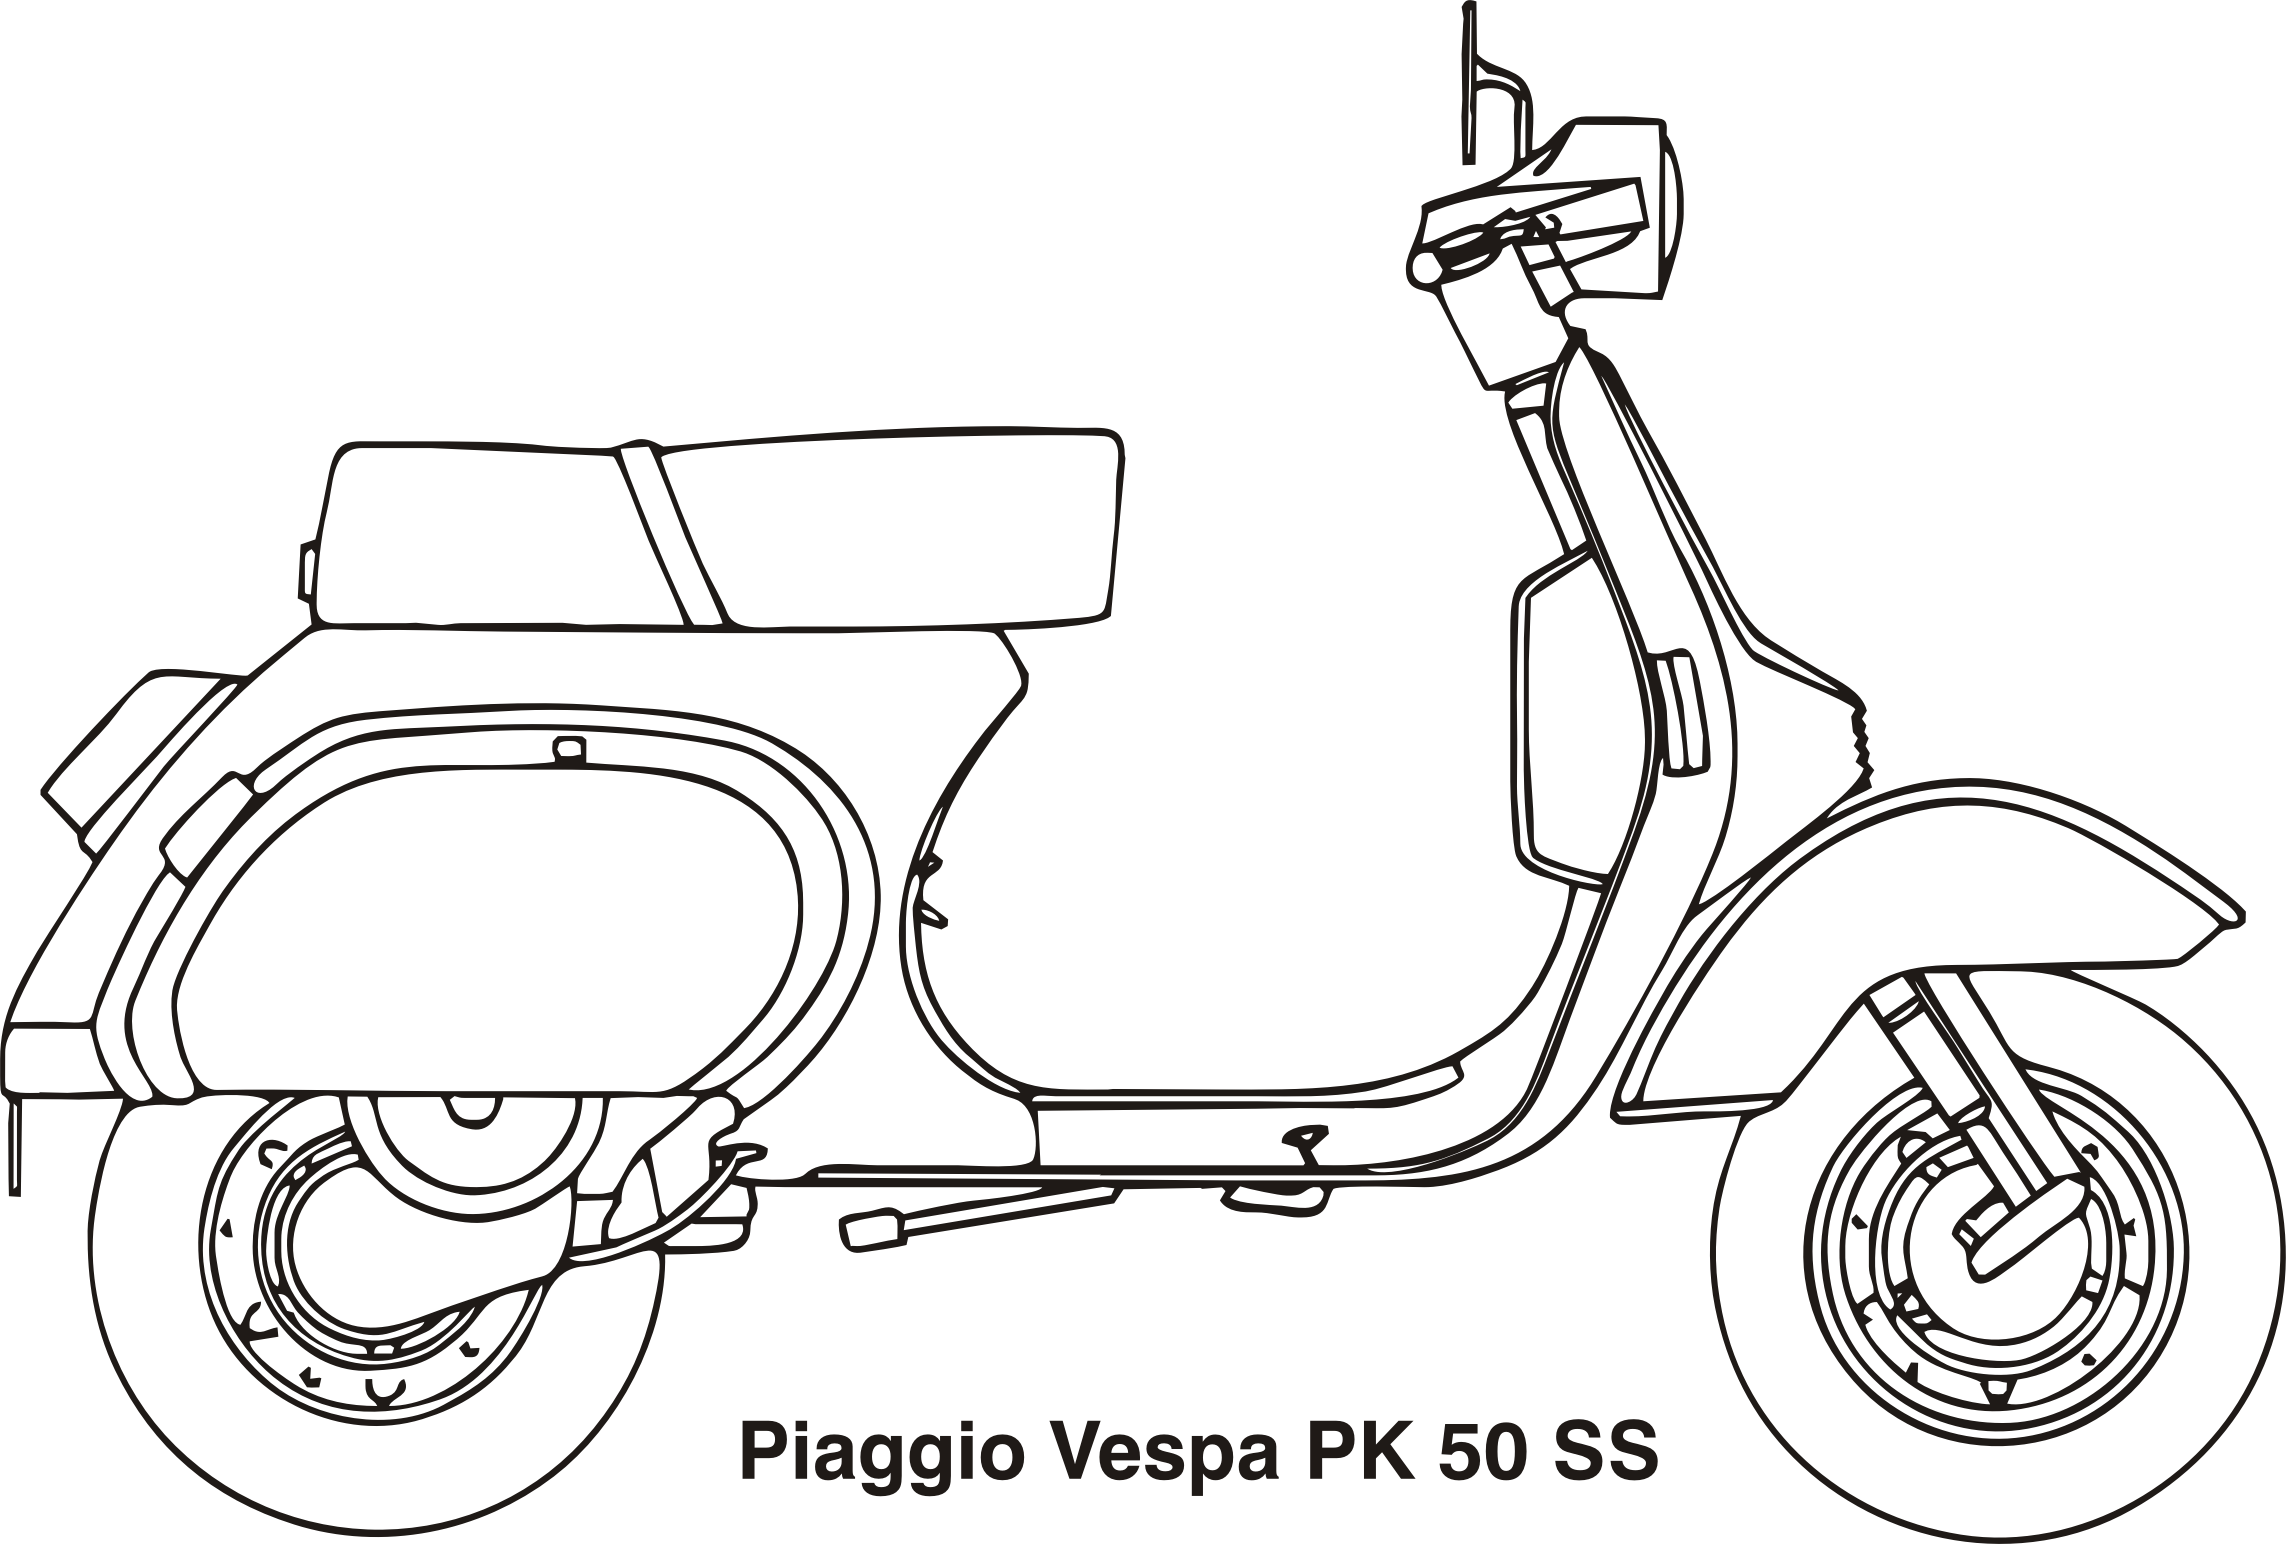 Piaggio Vespa PK 50 SS, year 1983 PNG icon